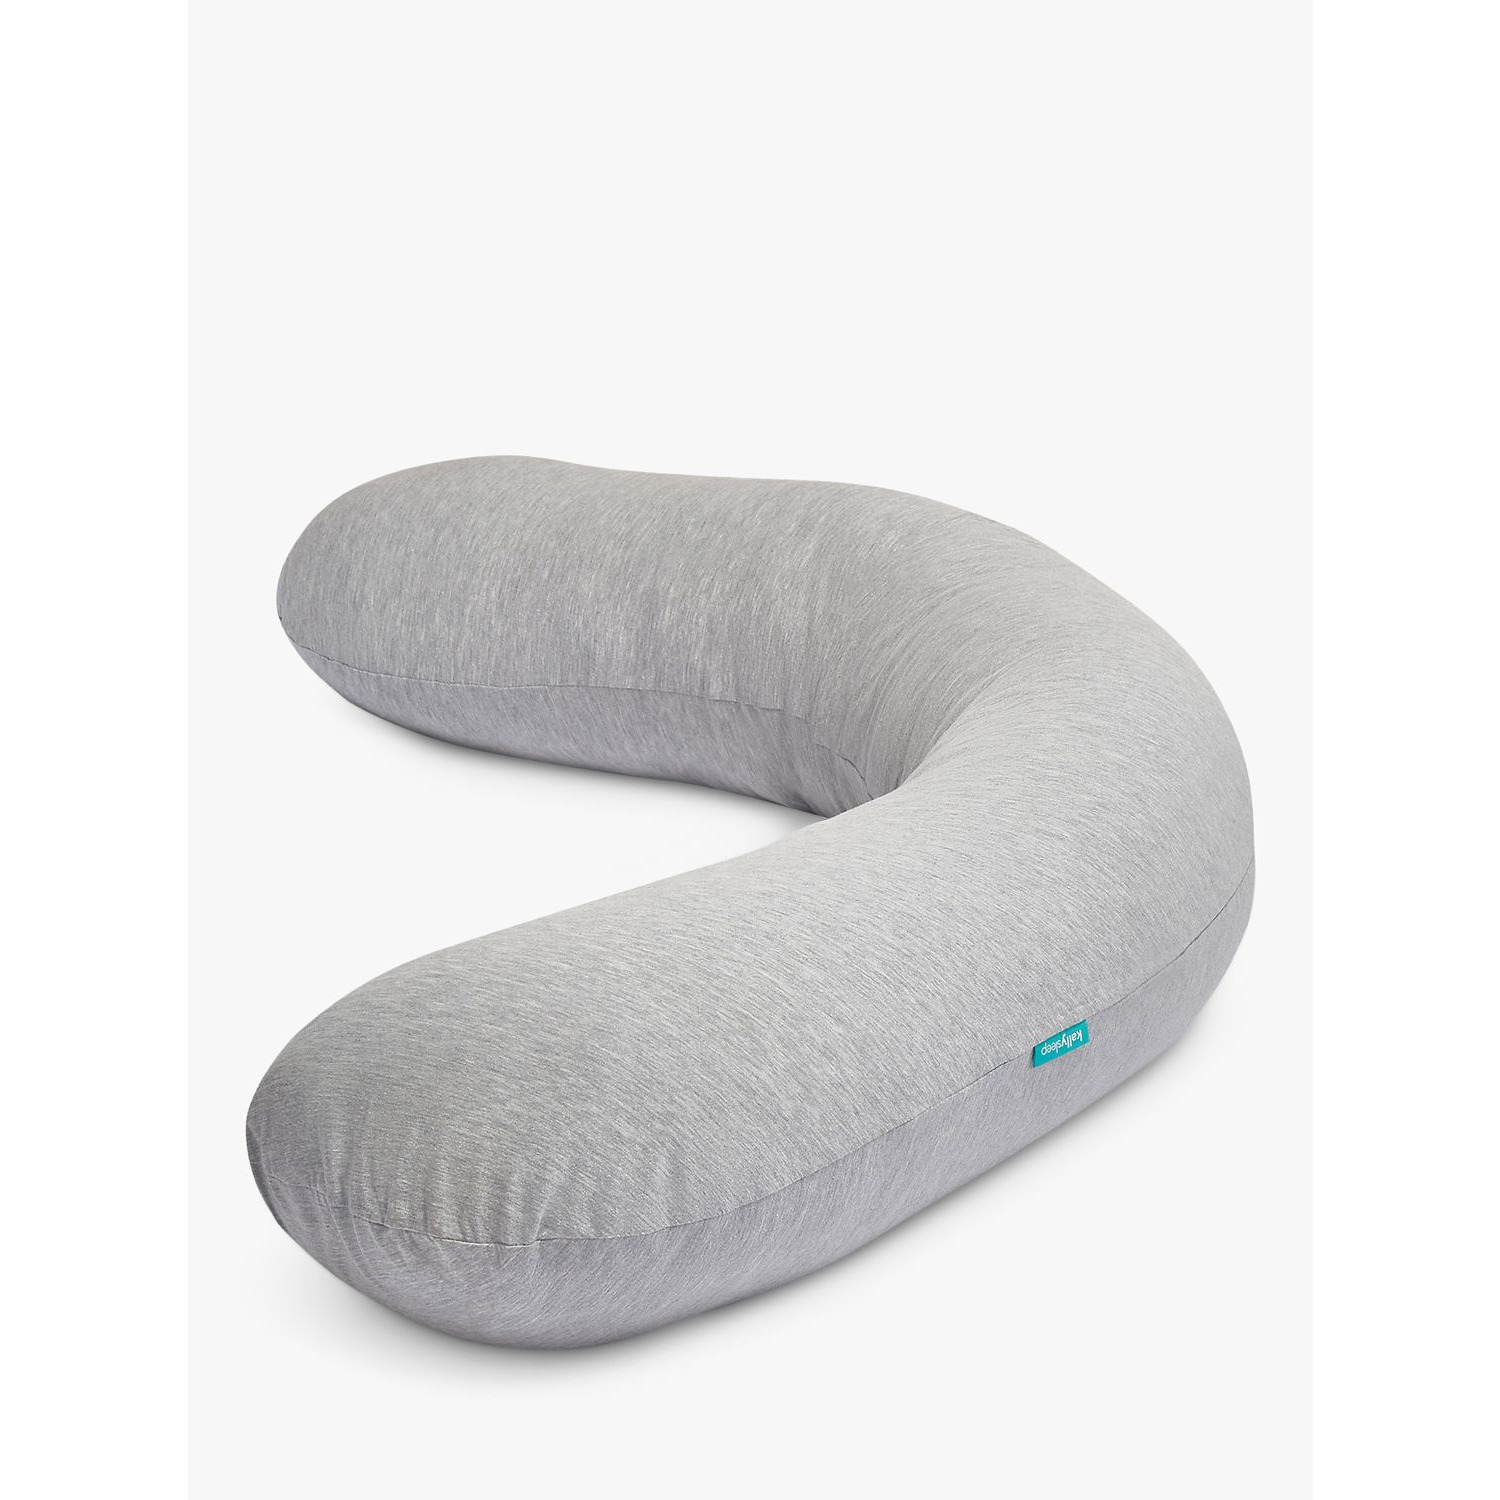 Kally Sleep Full Length Body Support Pillow, Grey - image 1